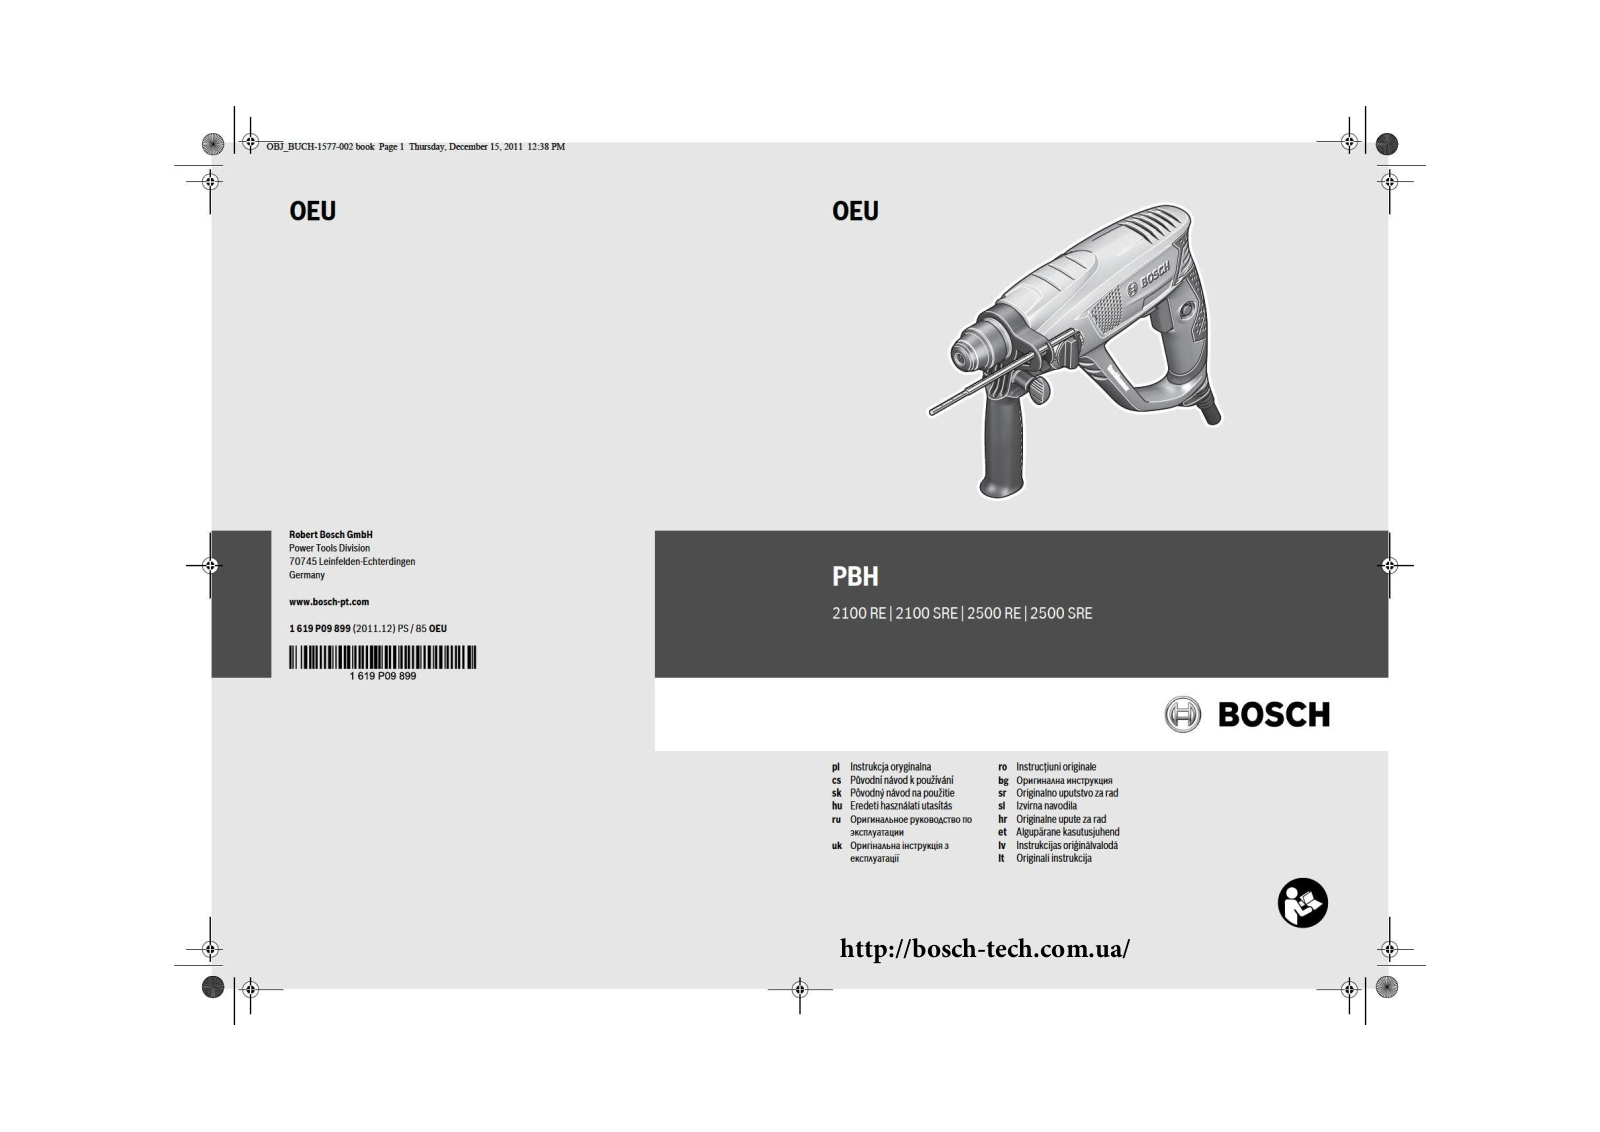 Bosch PBH 2100 RE User Manual